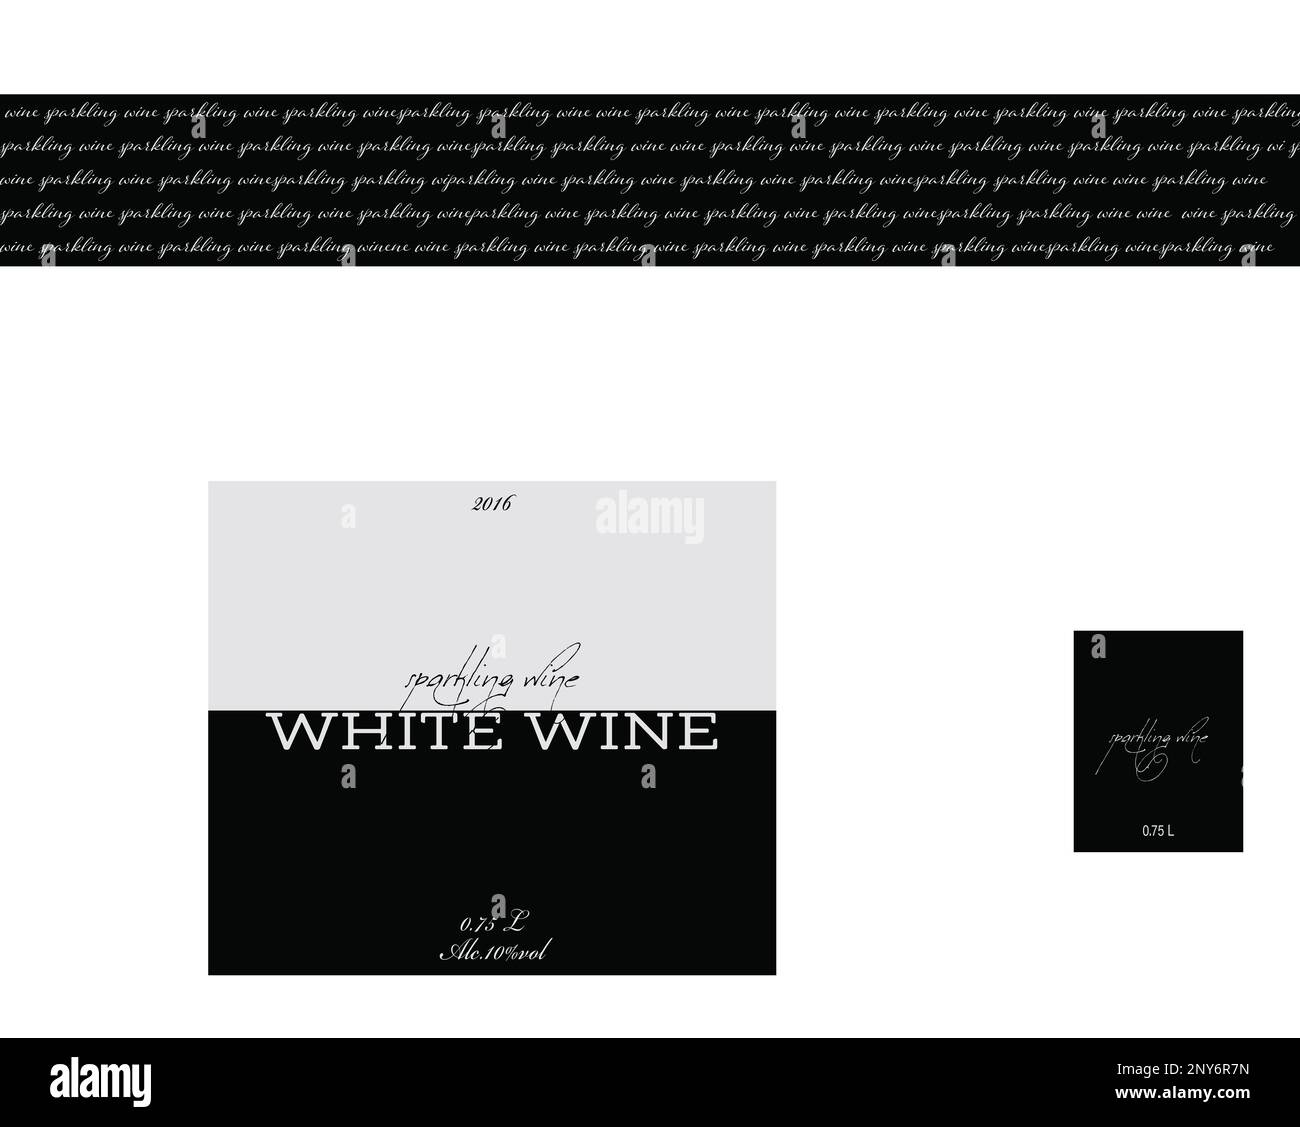 Beautiful wine bottle label, illustration. Mockup for design Stock Photo